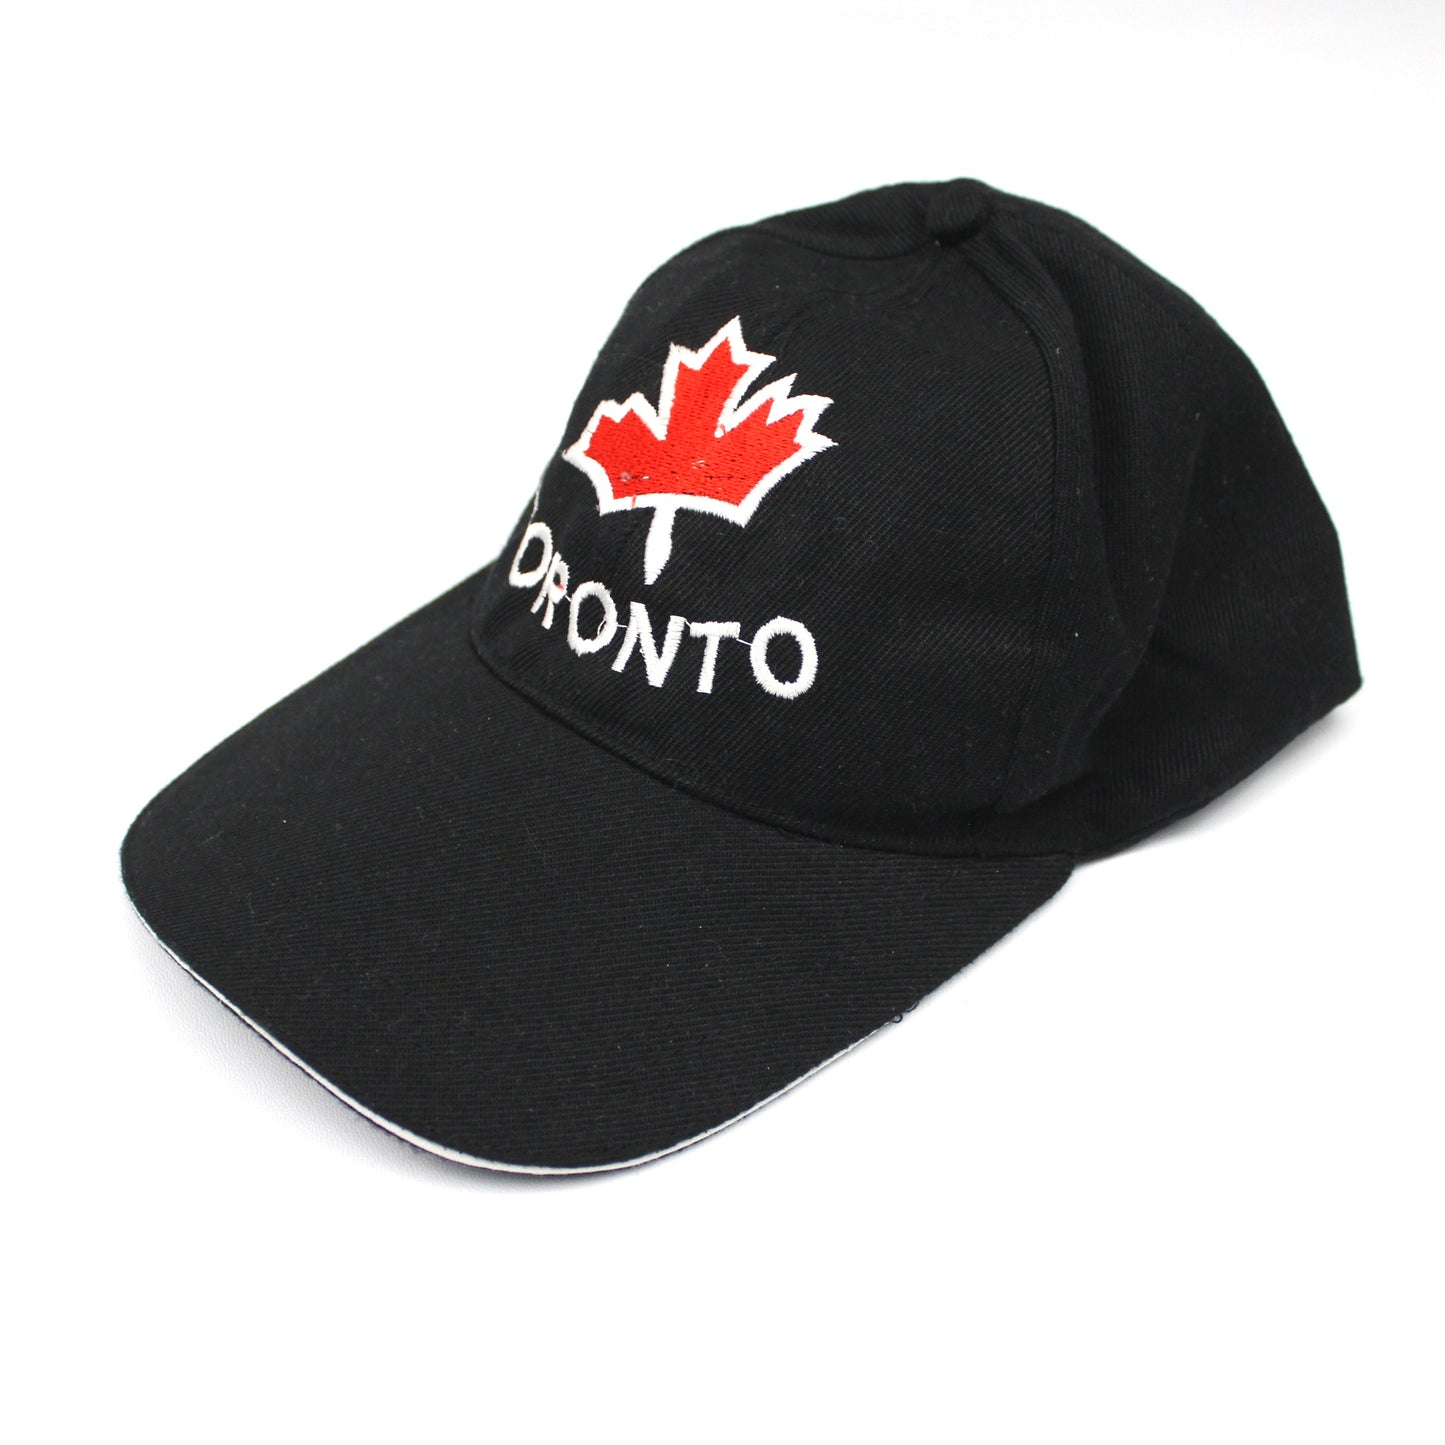 Vintage Toronto, Canada Black Embroidered Cap